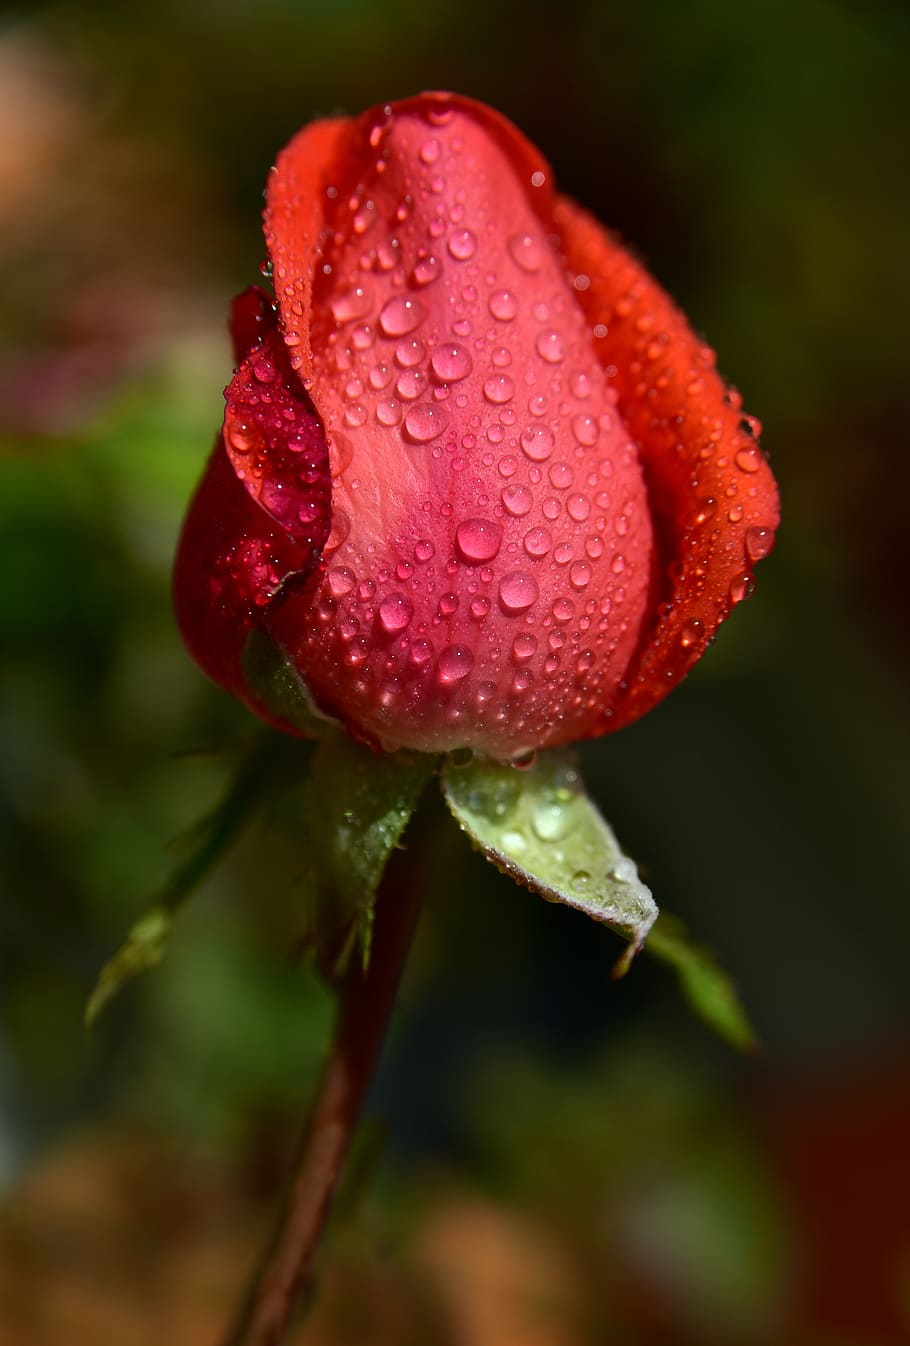 rosa, brote, capullo de rosa, rojo, flor, tierno, cerrado, rocío, lluvia, gota de lluvia